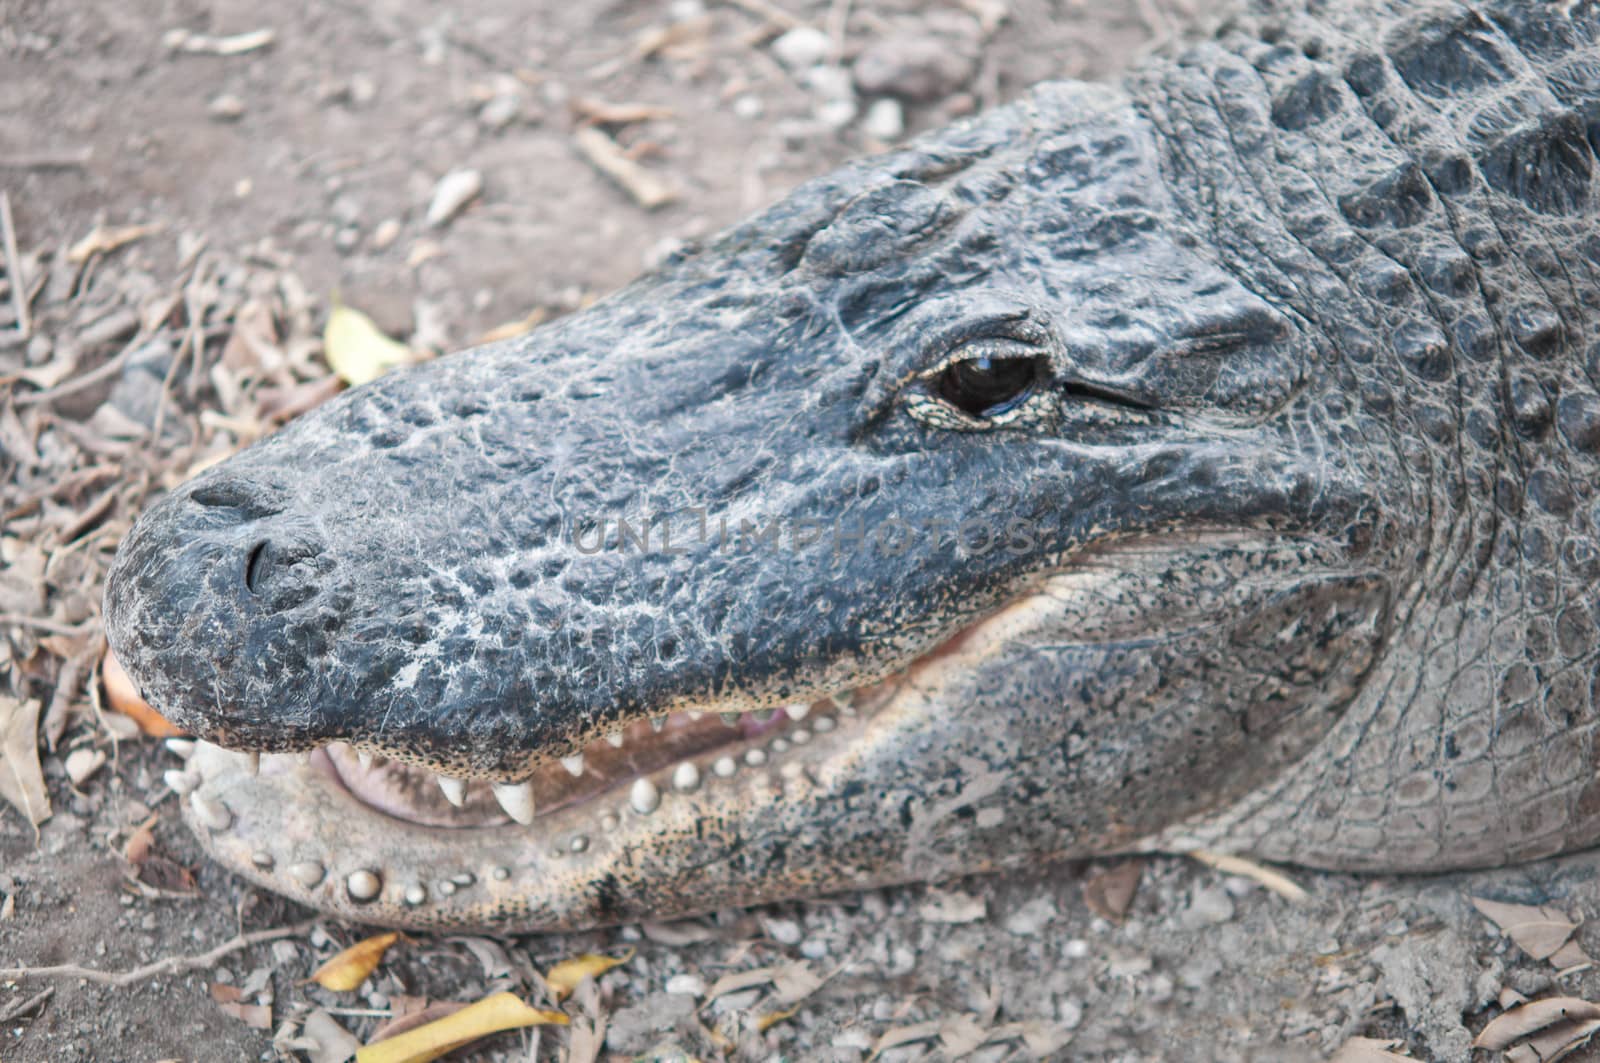 SaltwaterCrocodile by LarisaP